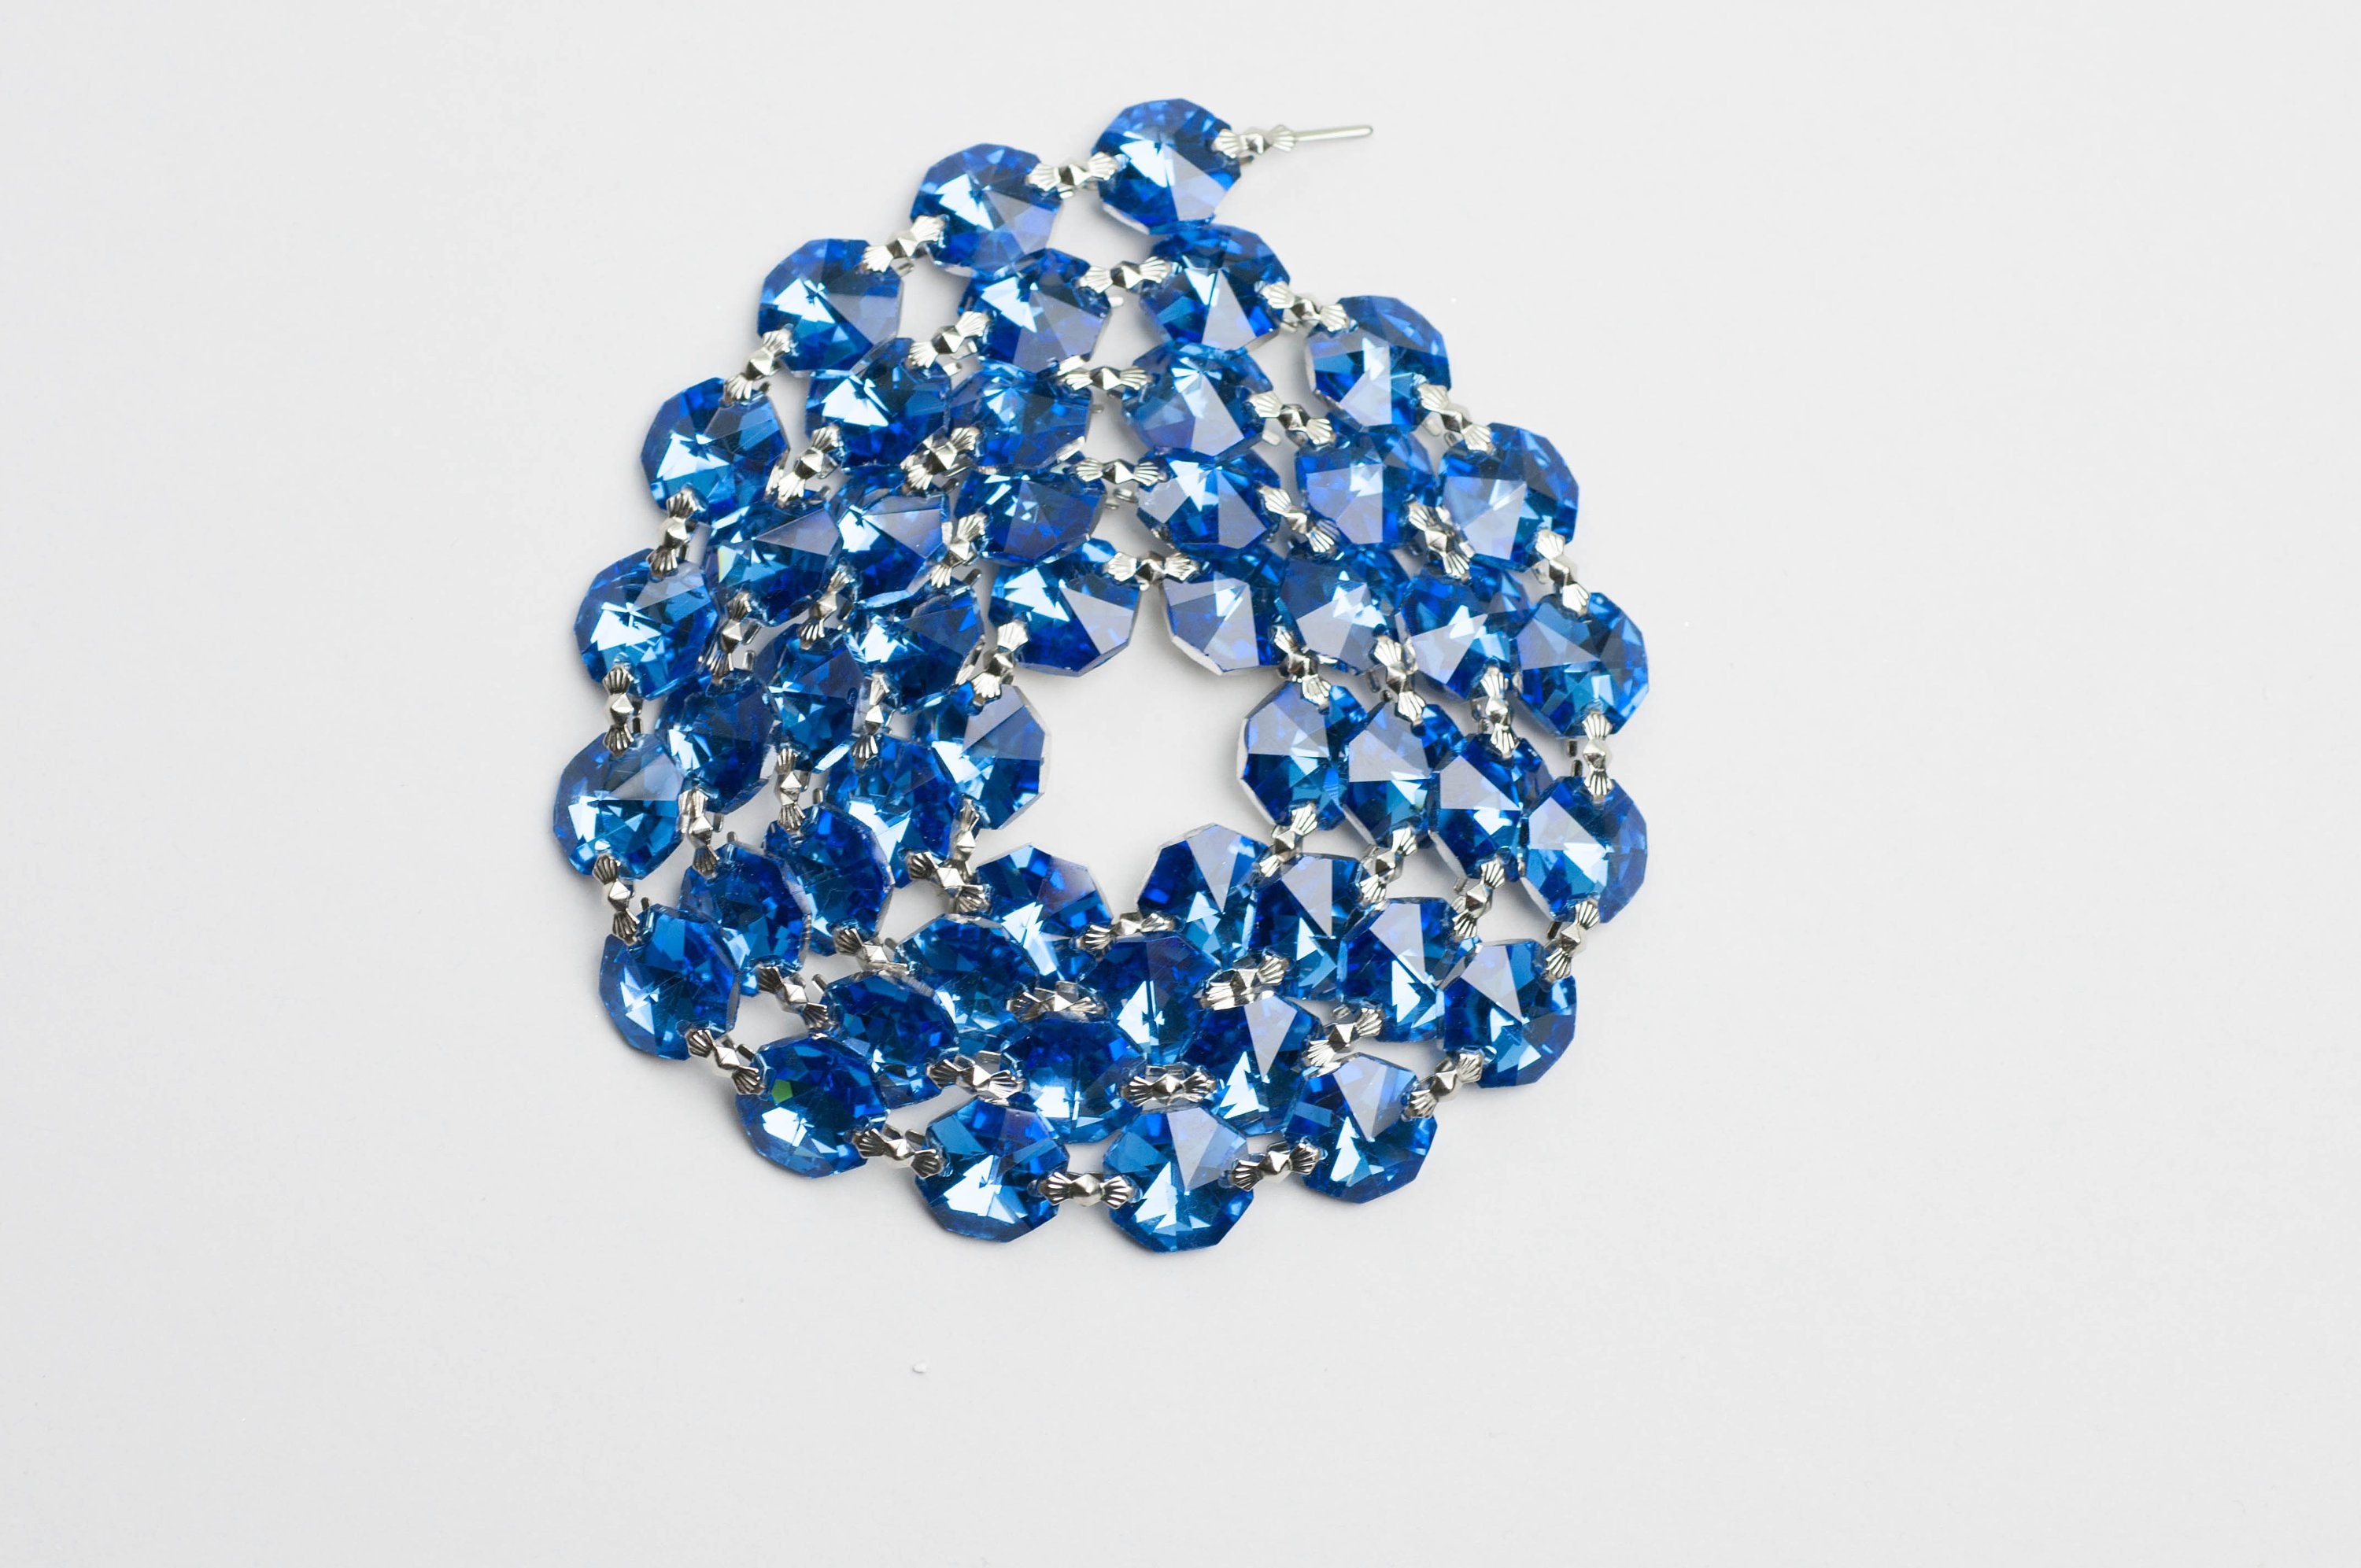 100x 14mm Octagon Crystal Suncatcher Beads 1 Hole Ass Colours